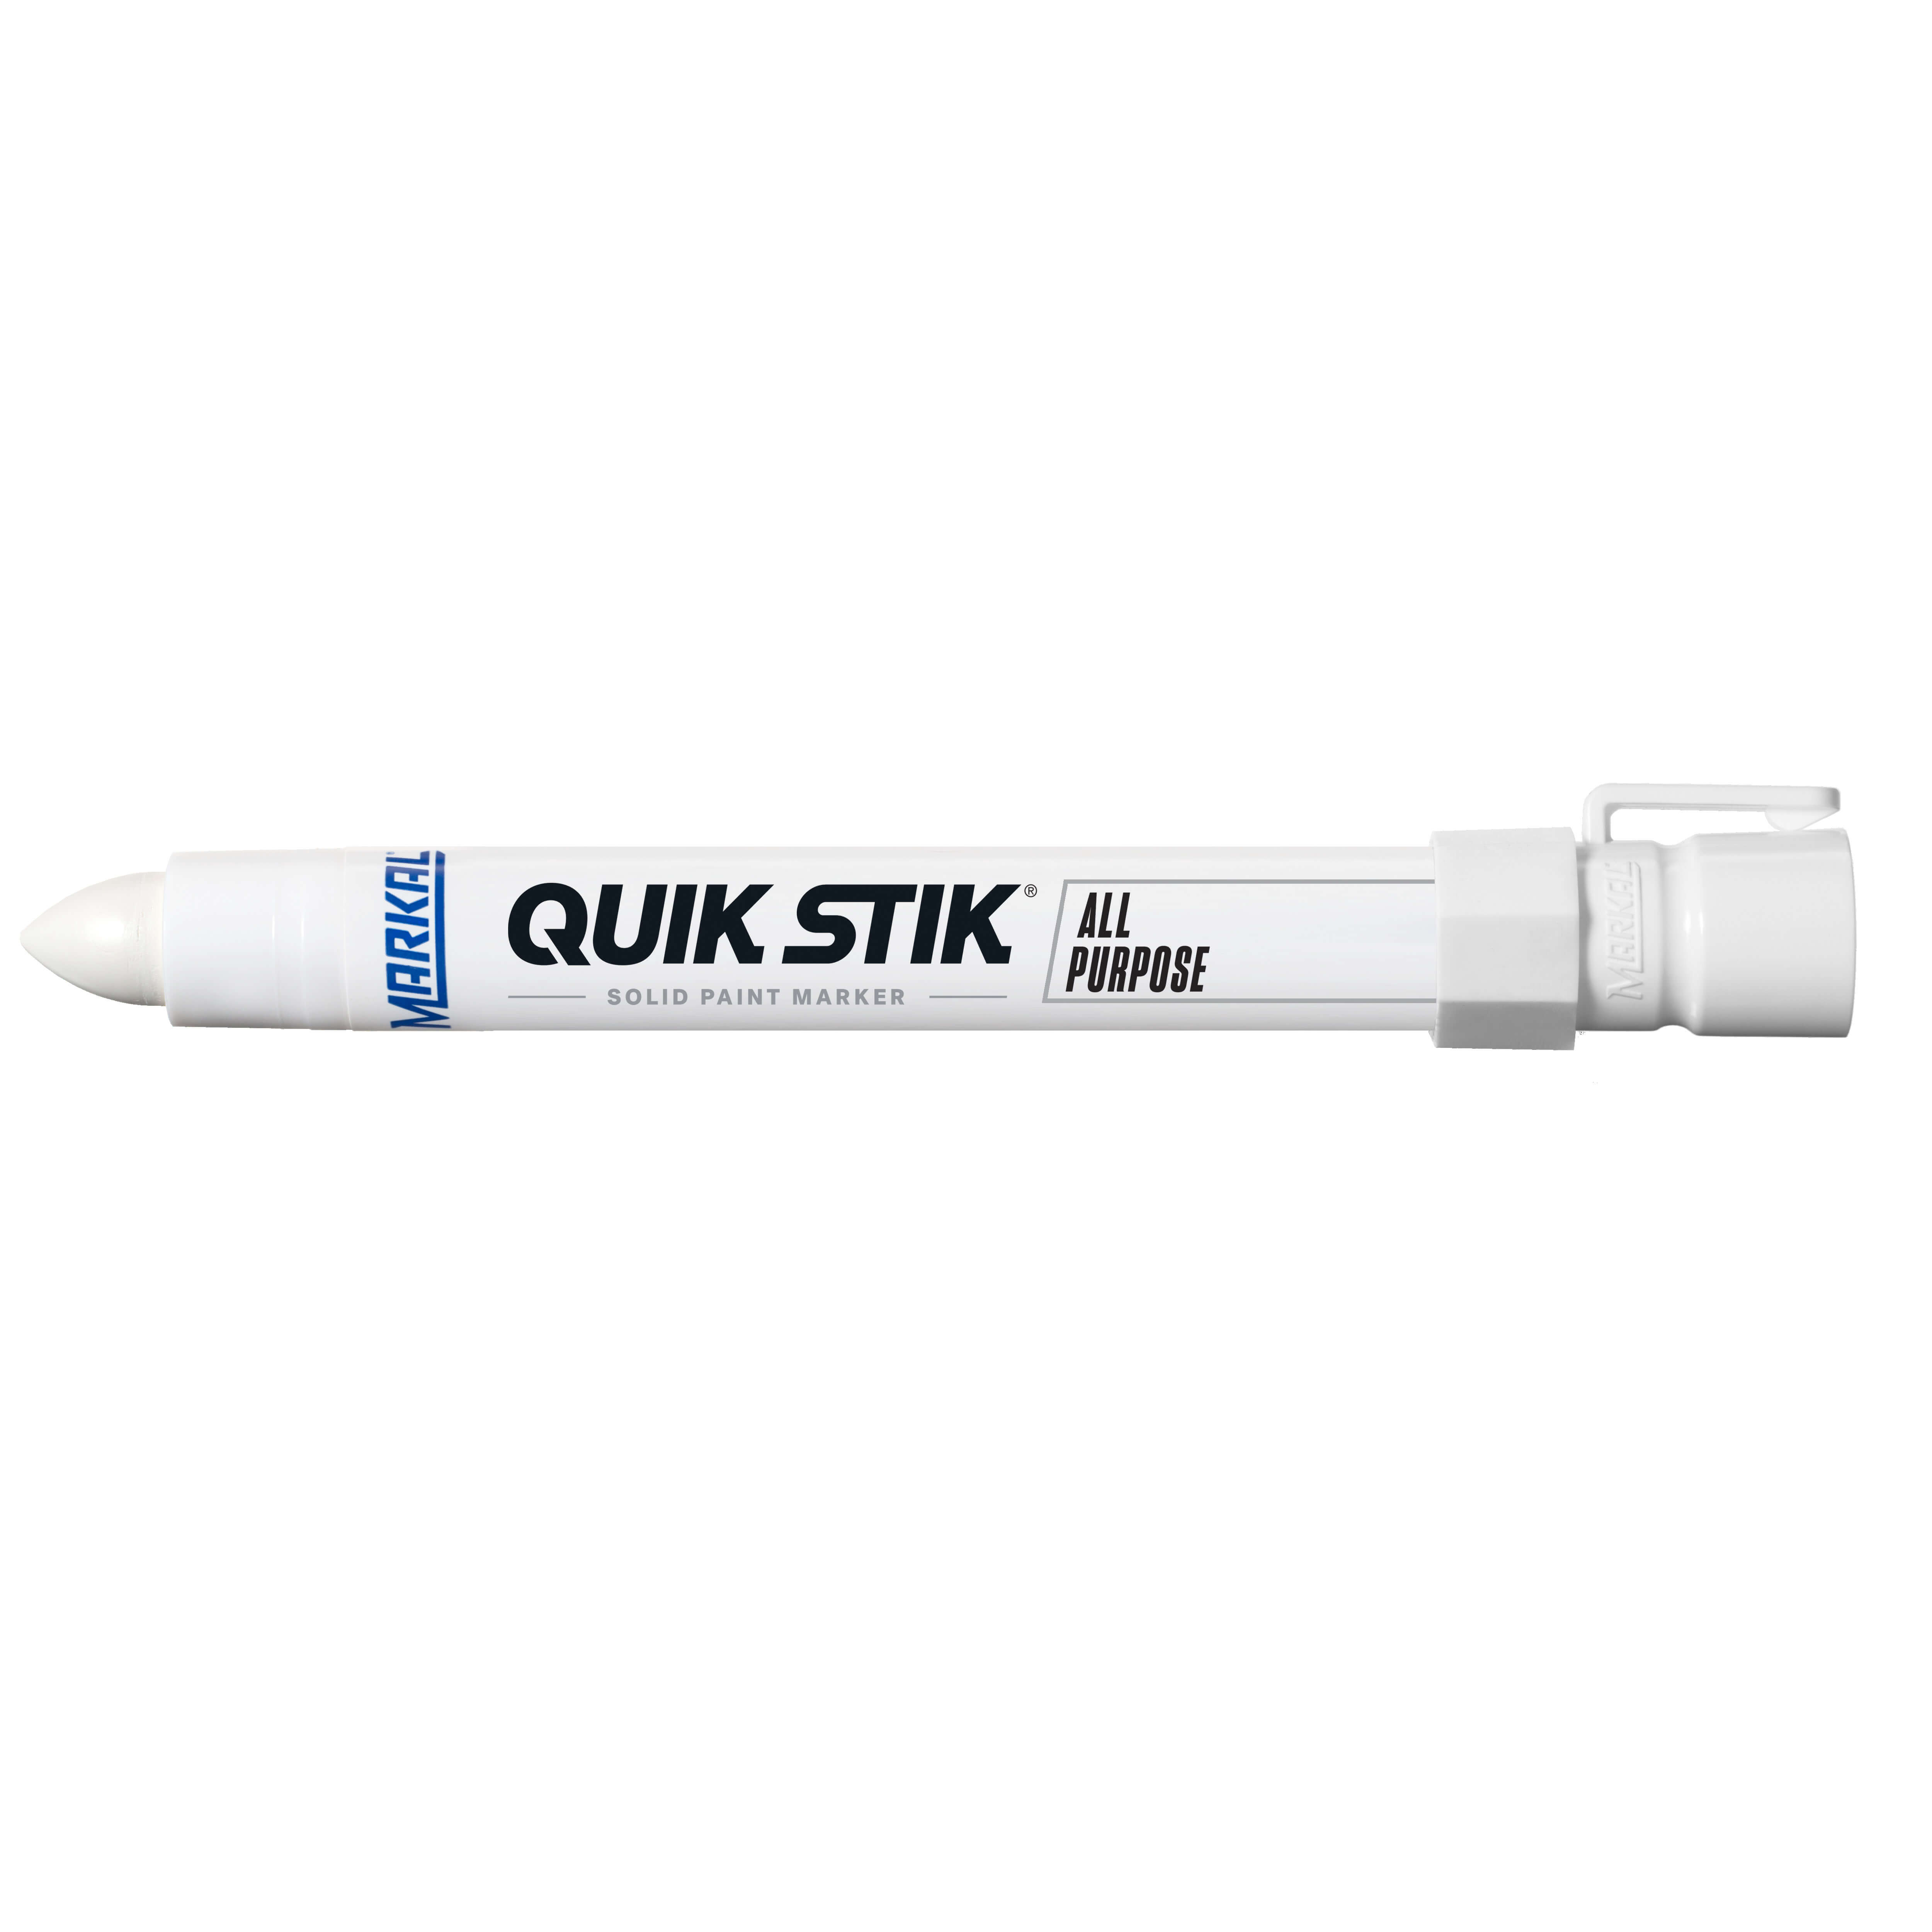 Quik Stik All Purpose – Farbmarker, weiß